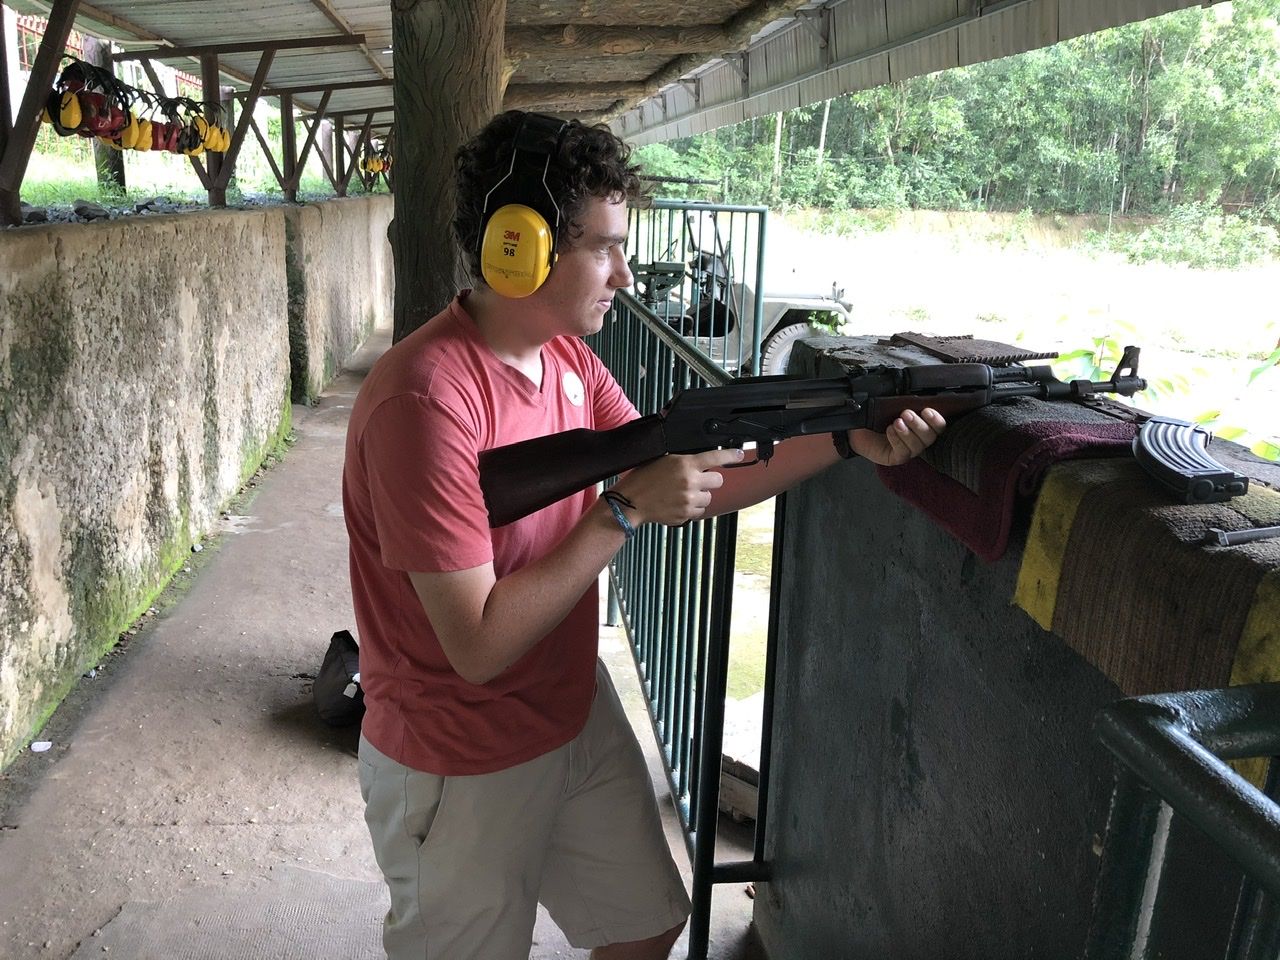 Holding an AK47 at the shooting range